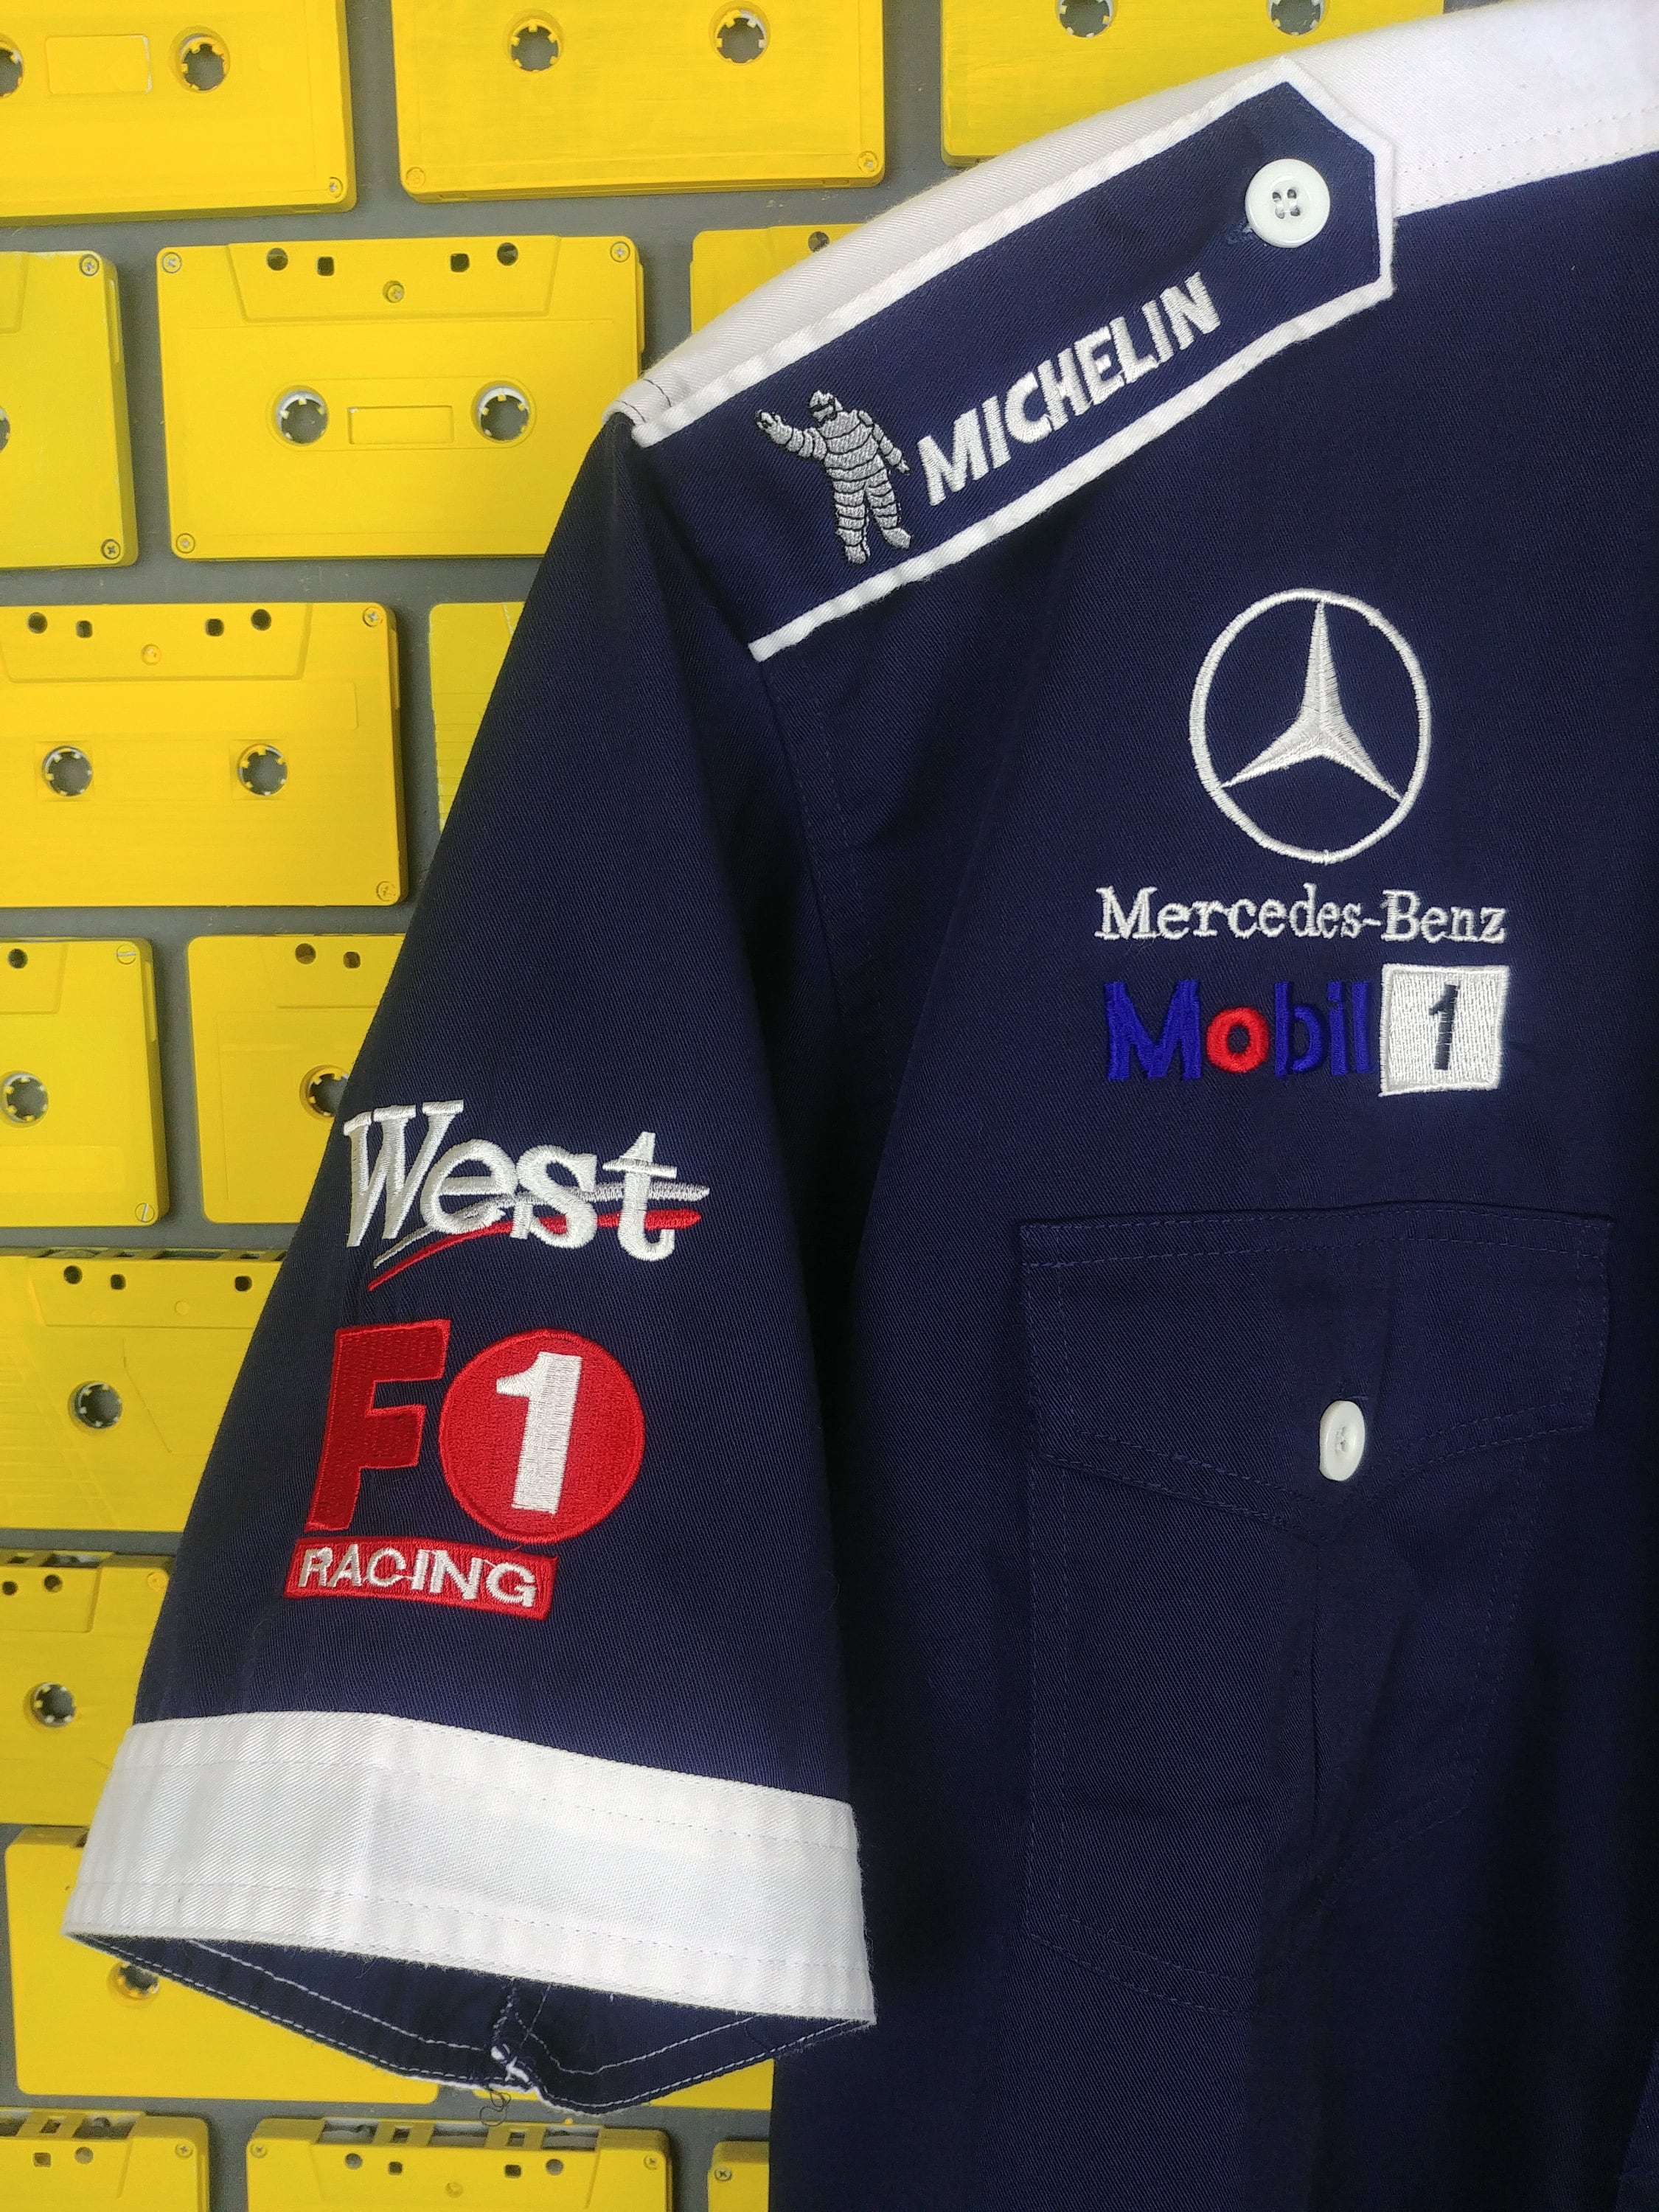 Vintage Mclaren Mercedes F1 Pit One Etsy Formla Crew Racing Shirt up West Grand Button Size Shirt Merch Michelin Prix Siemens XXL - Mobile Team